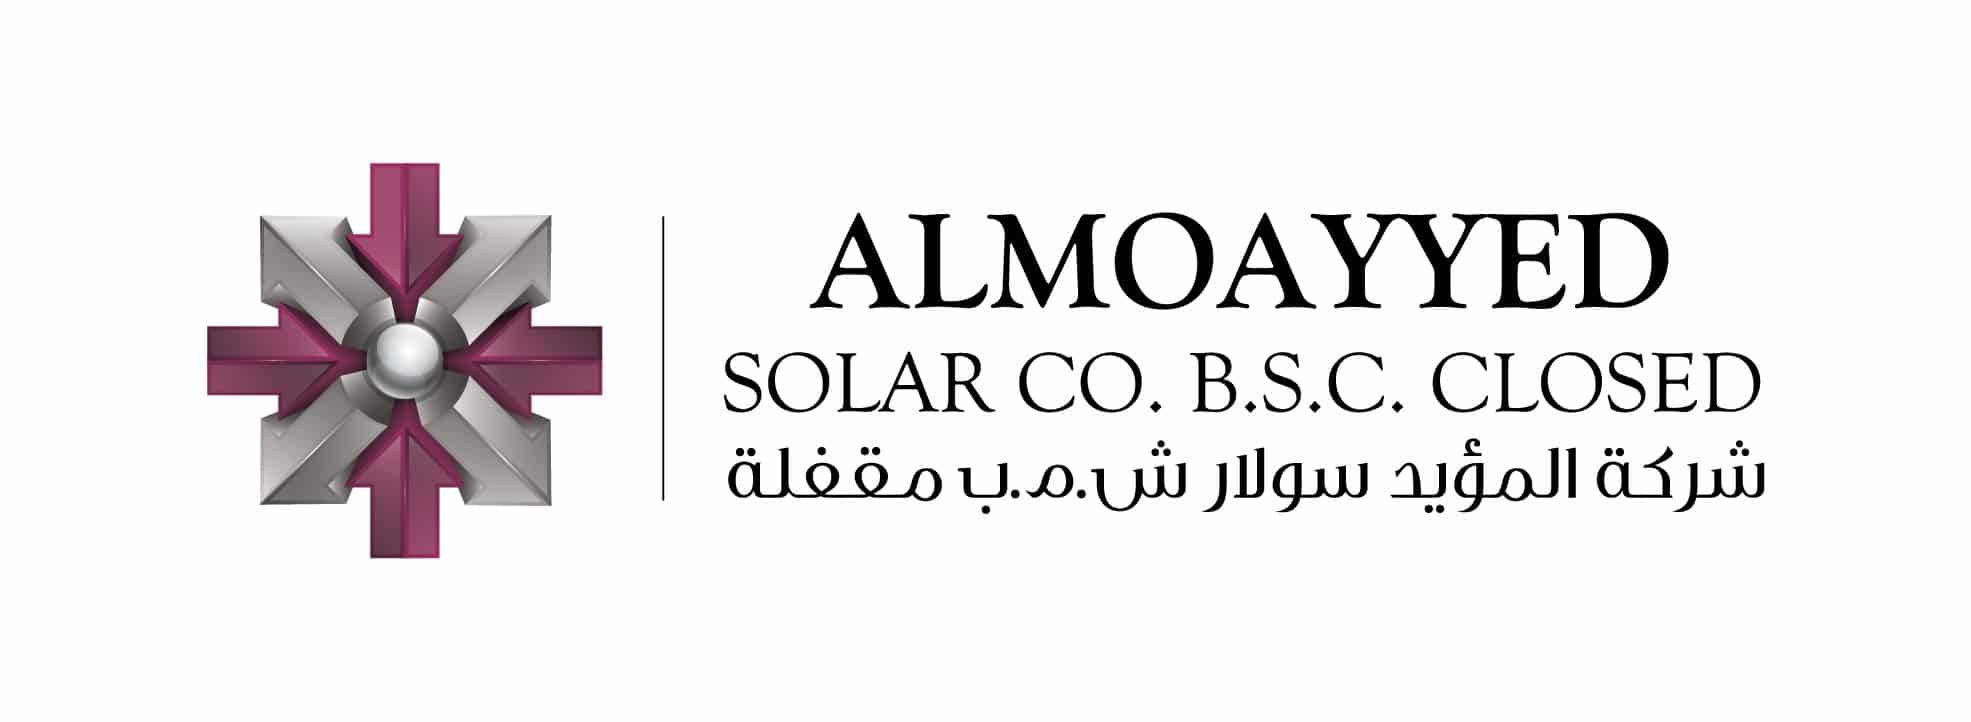 Almoayyed Solar